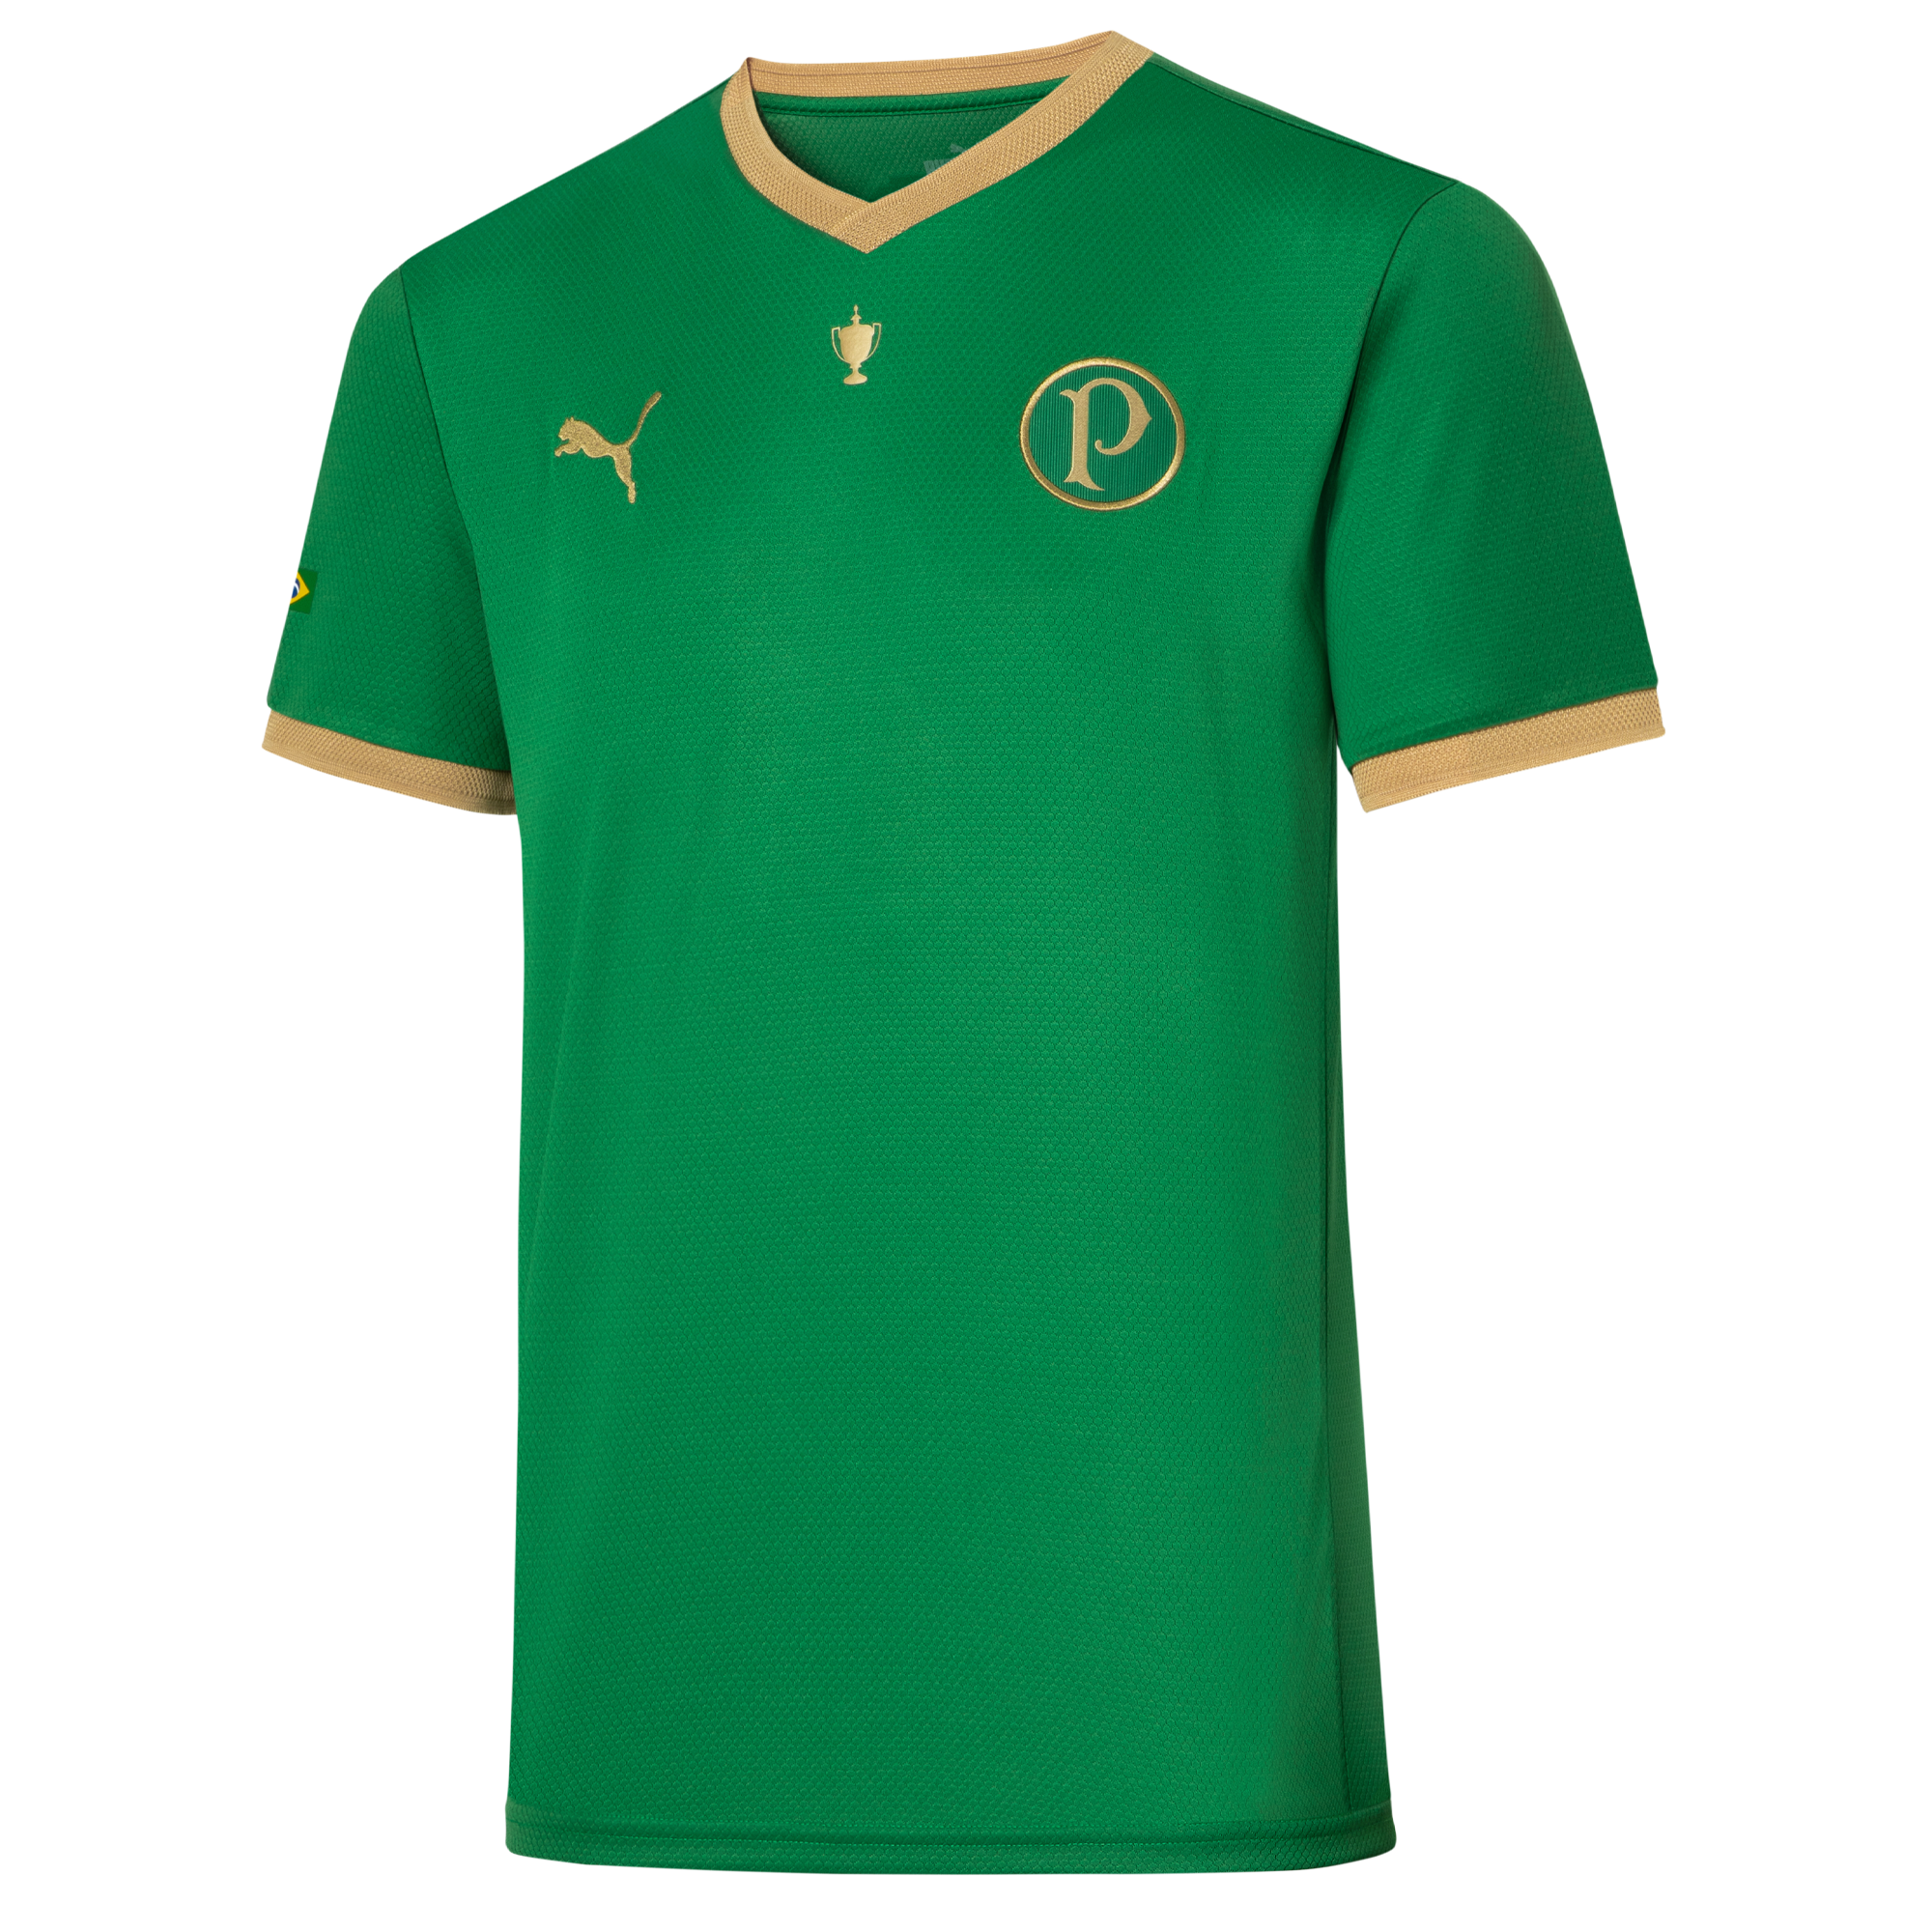 Palmeiras apresenta camisa comemorativa aos 70 anos da conquista do Mundial  Interclubes - GQ